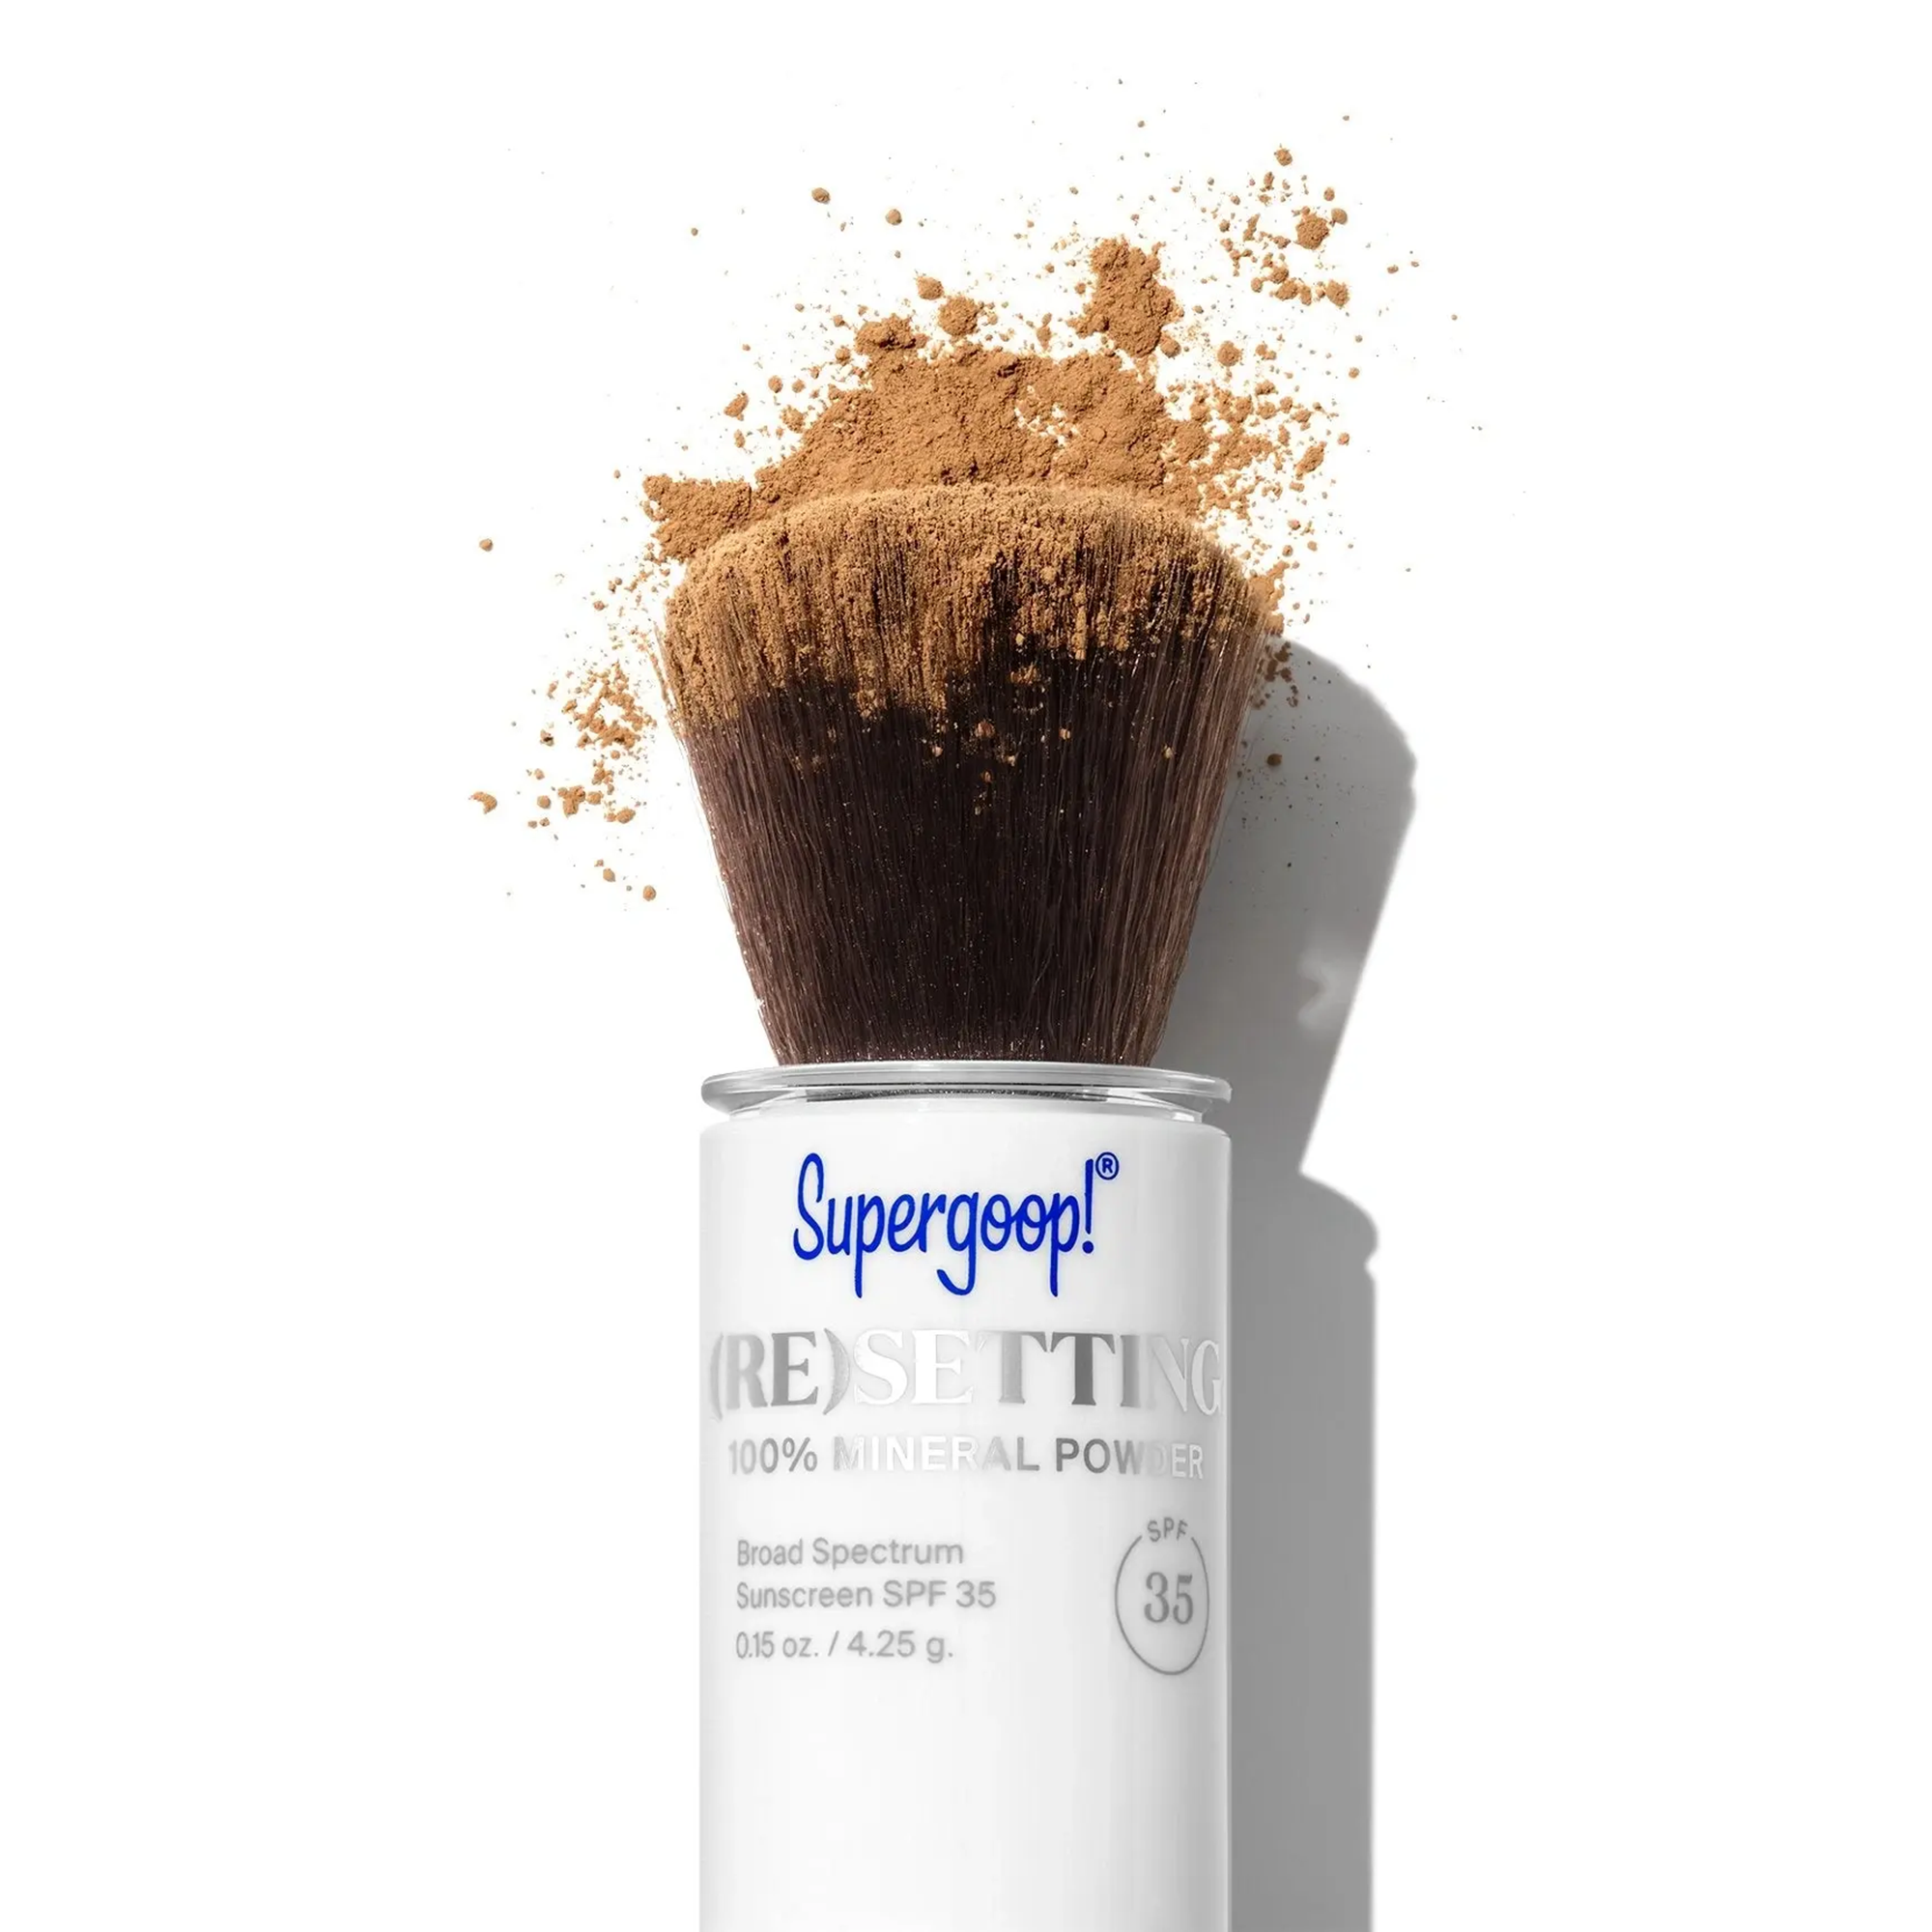 Supergoop! (Re)setting 100% Mineral Powder SPF 35 / DEEP